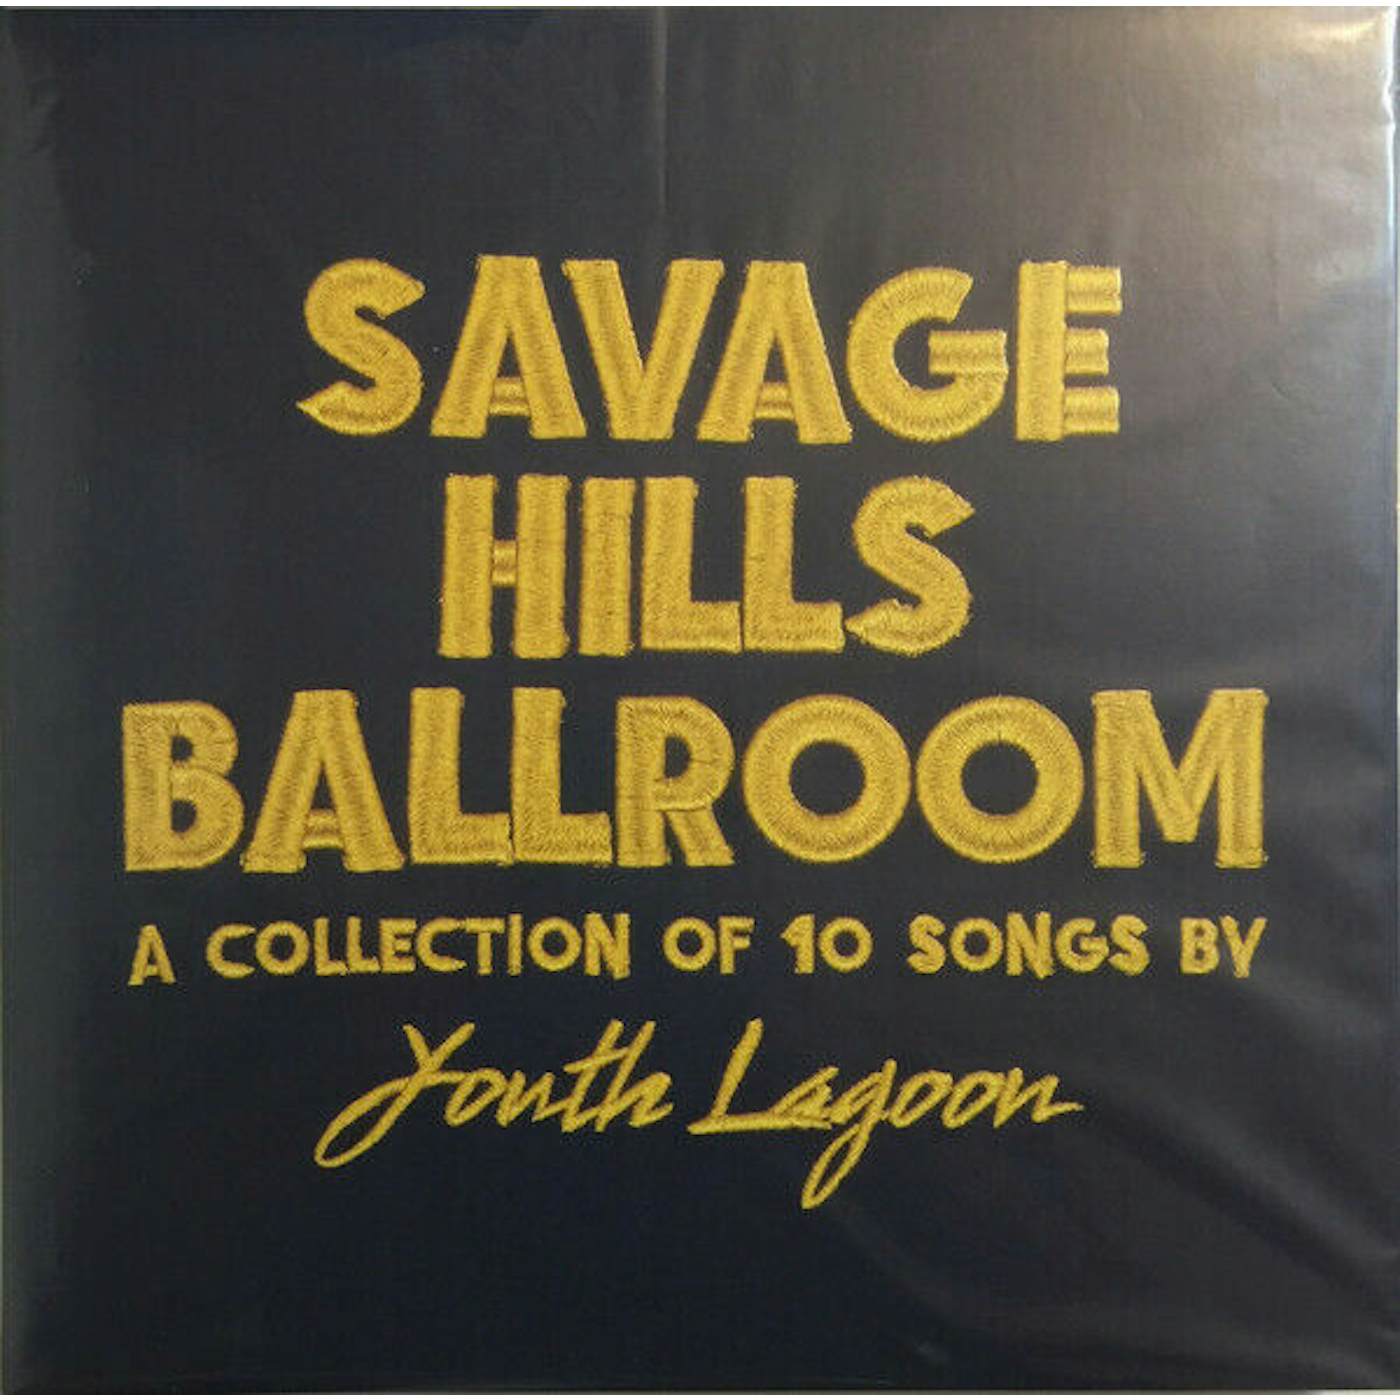 Youth Lagoon SAVAGE HILLS BALLROOM Vinyl Record